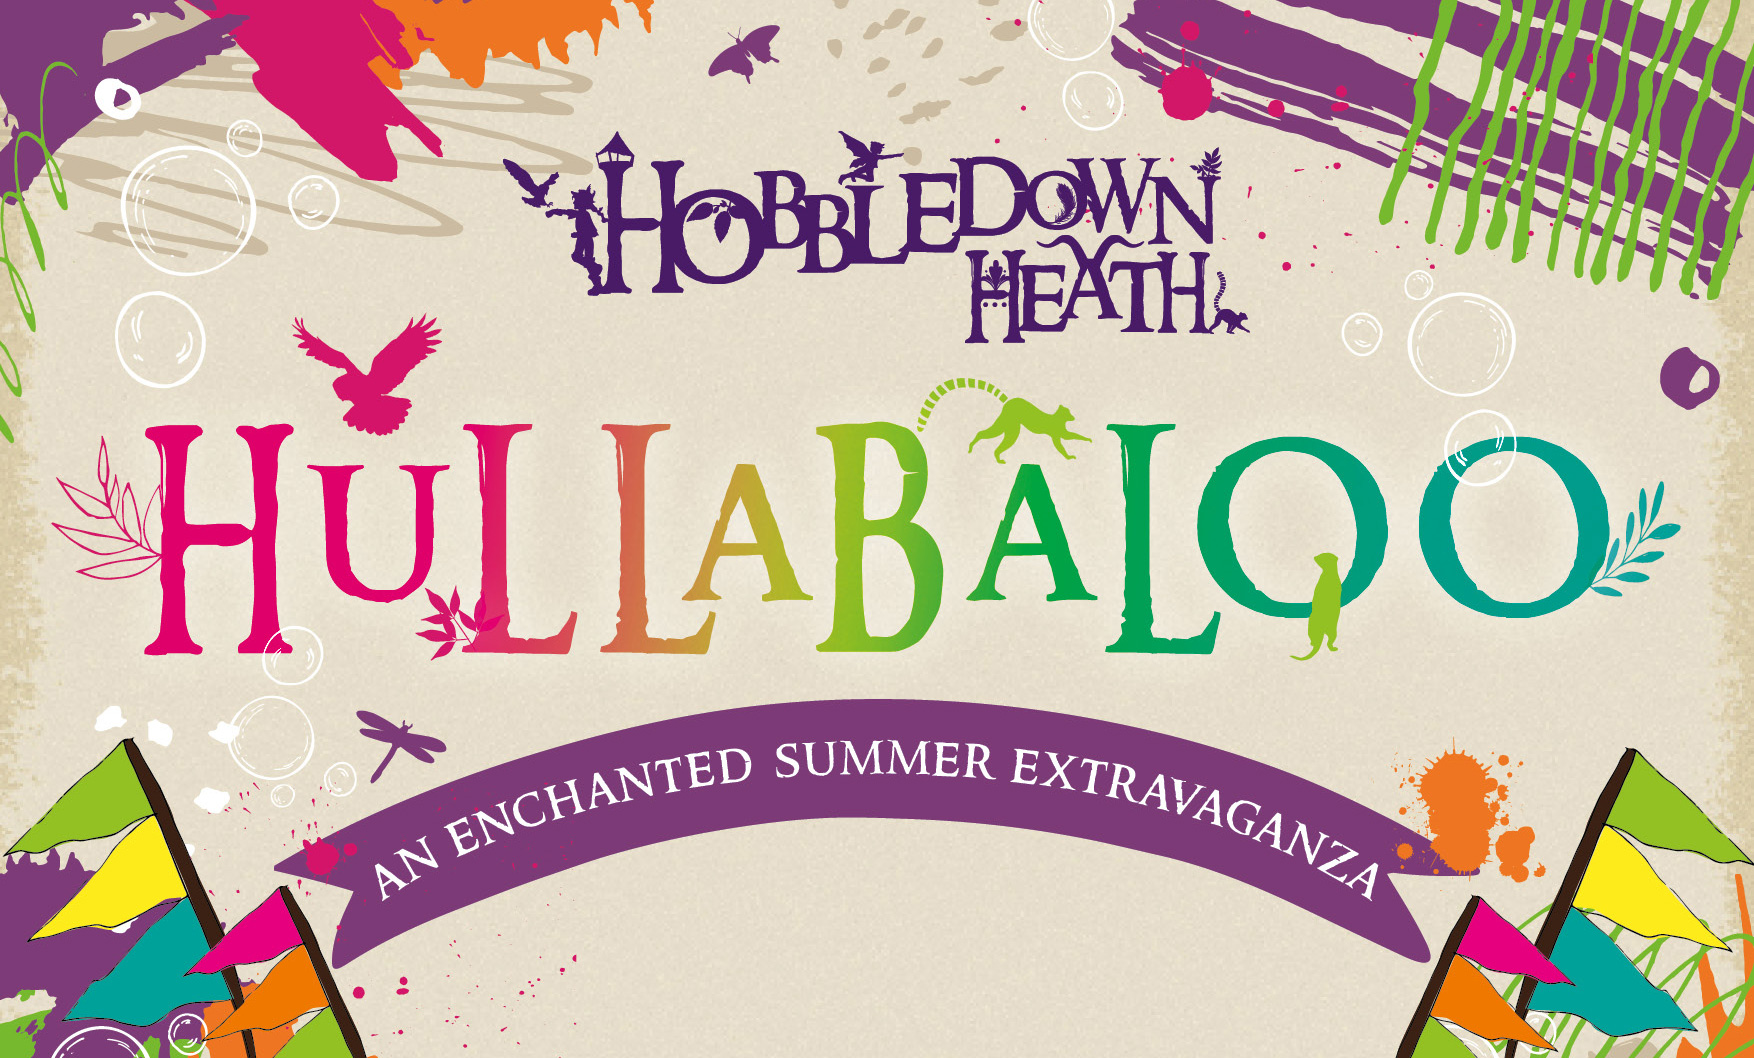 Summer campaign creative Hullabaloo for Hobbledown Heath